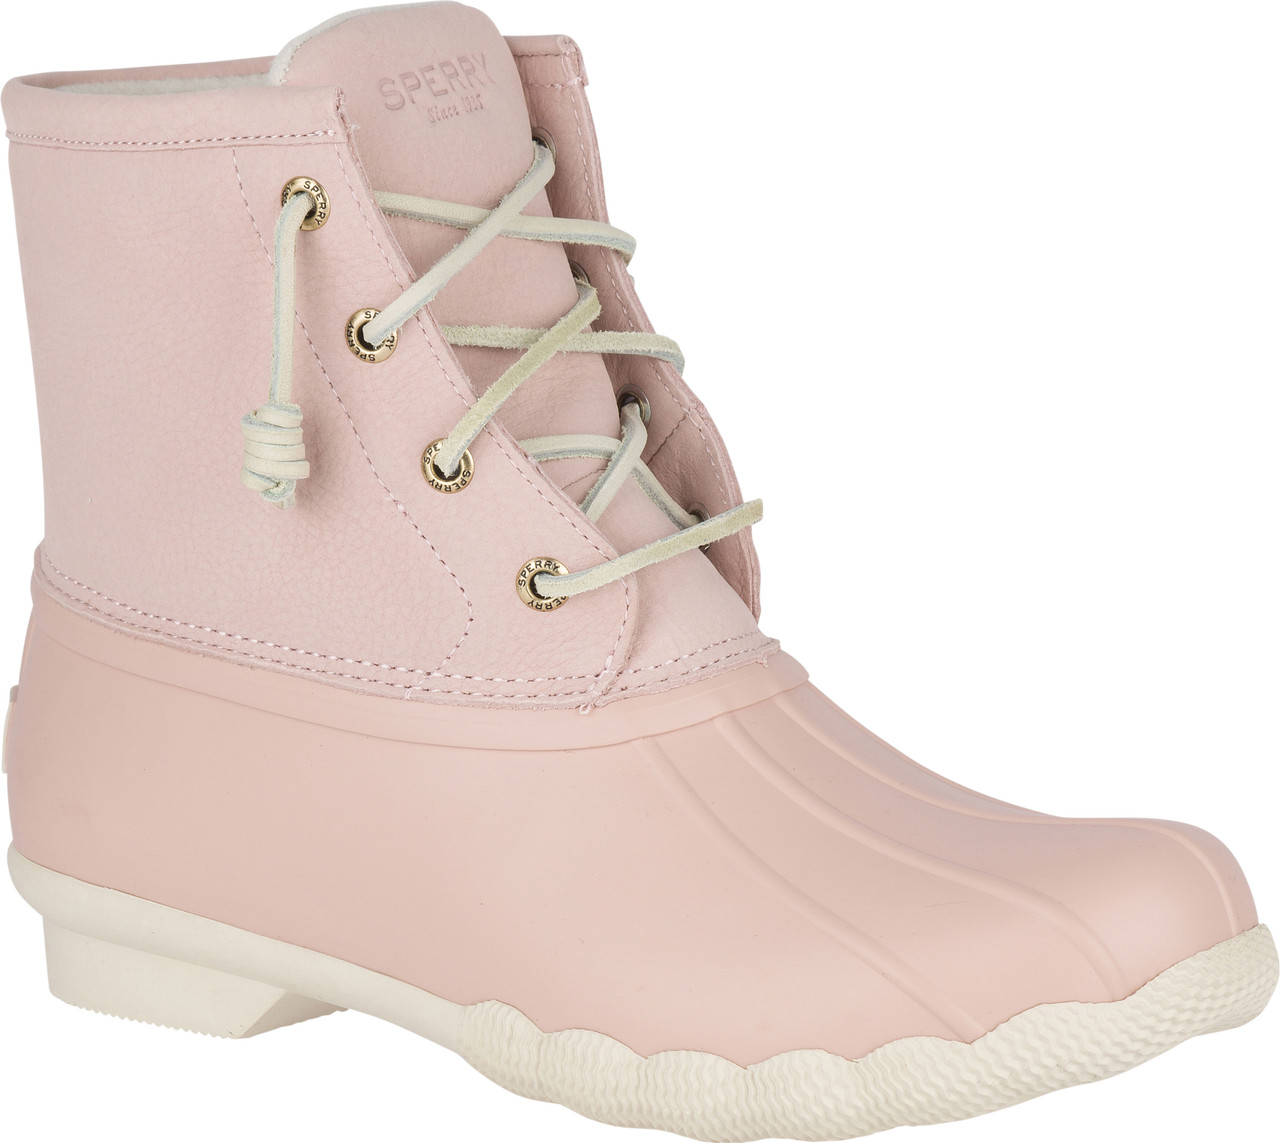 sperry waterproof womens boots